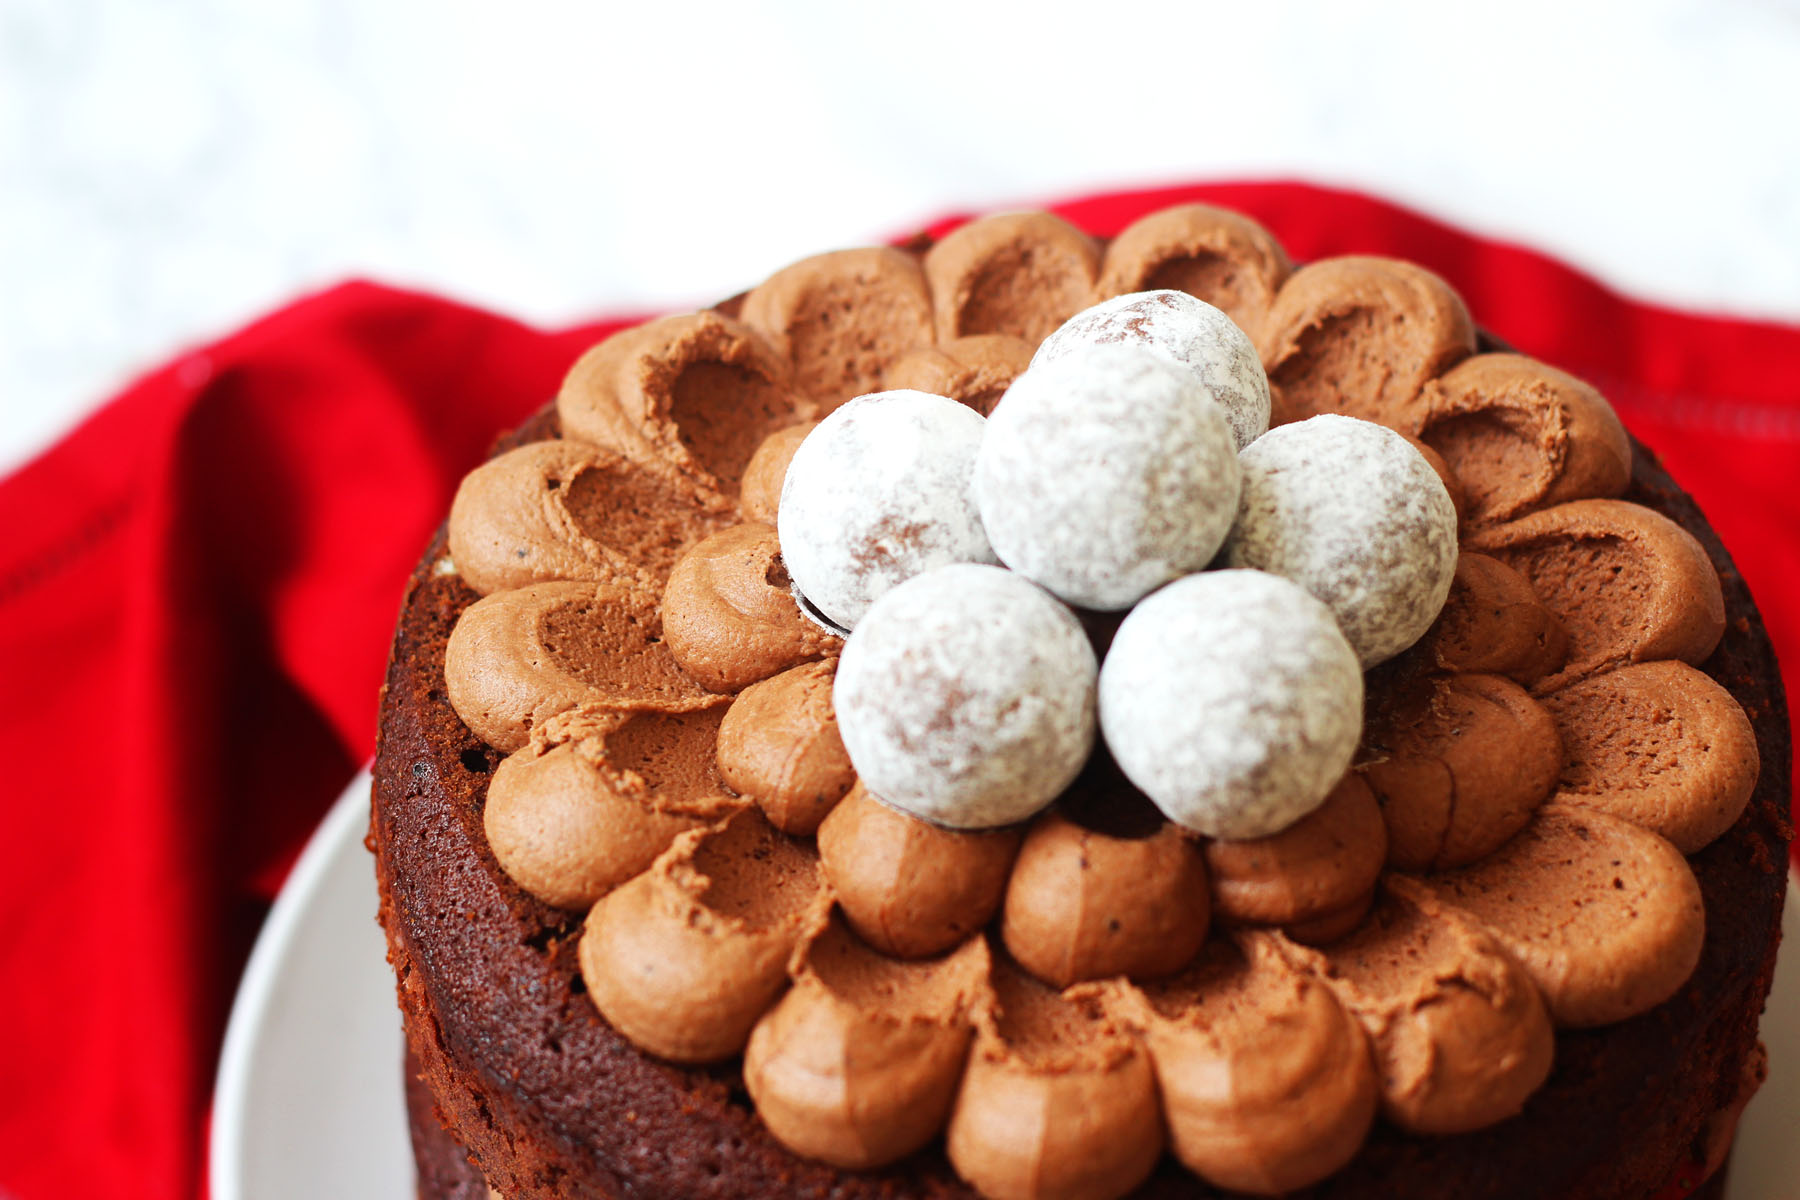 Chocolate Truffle Cake | The Cake Blog